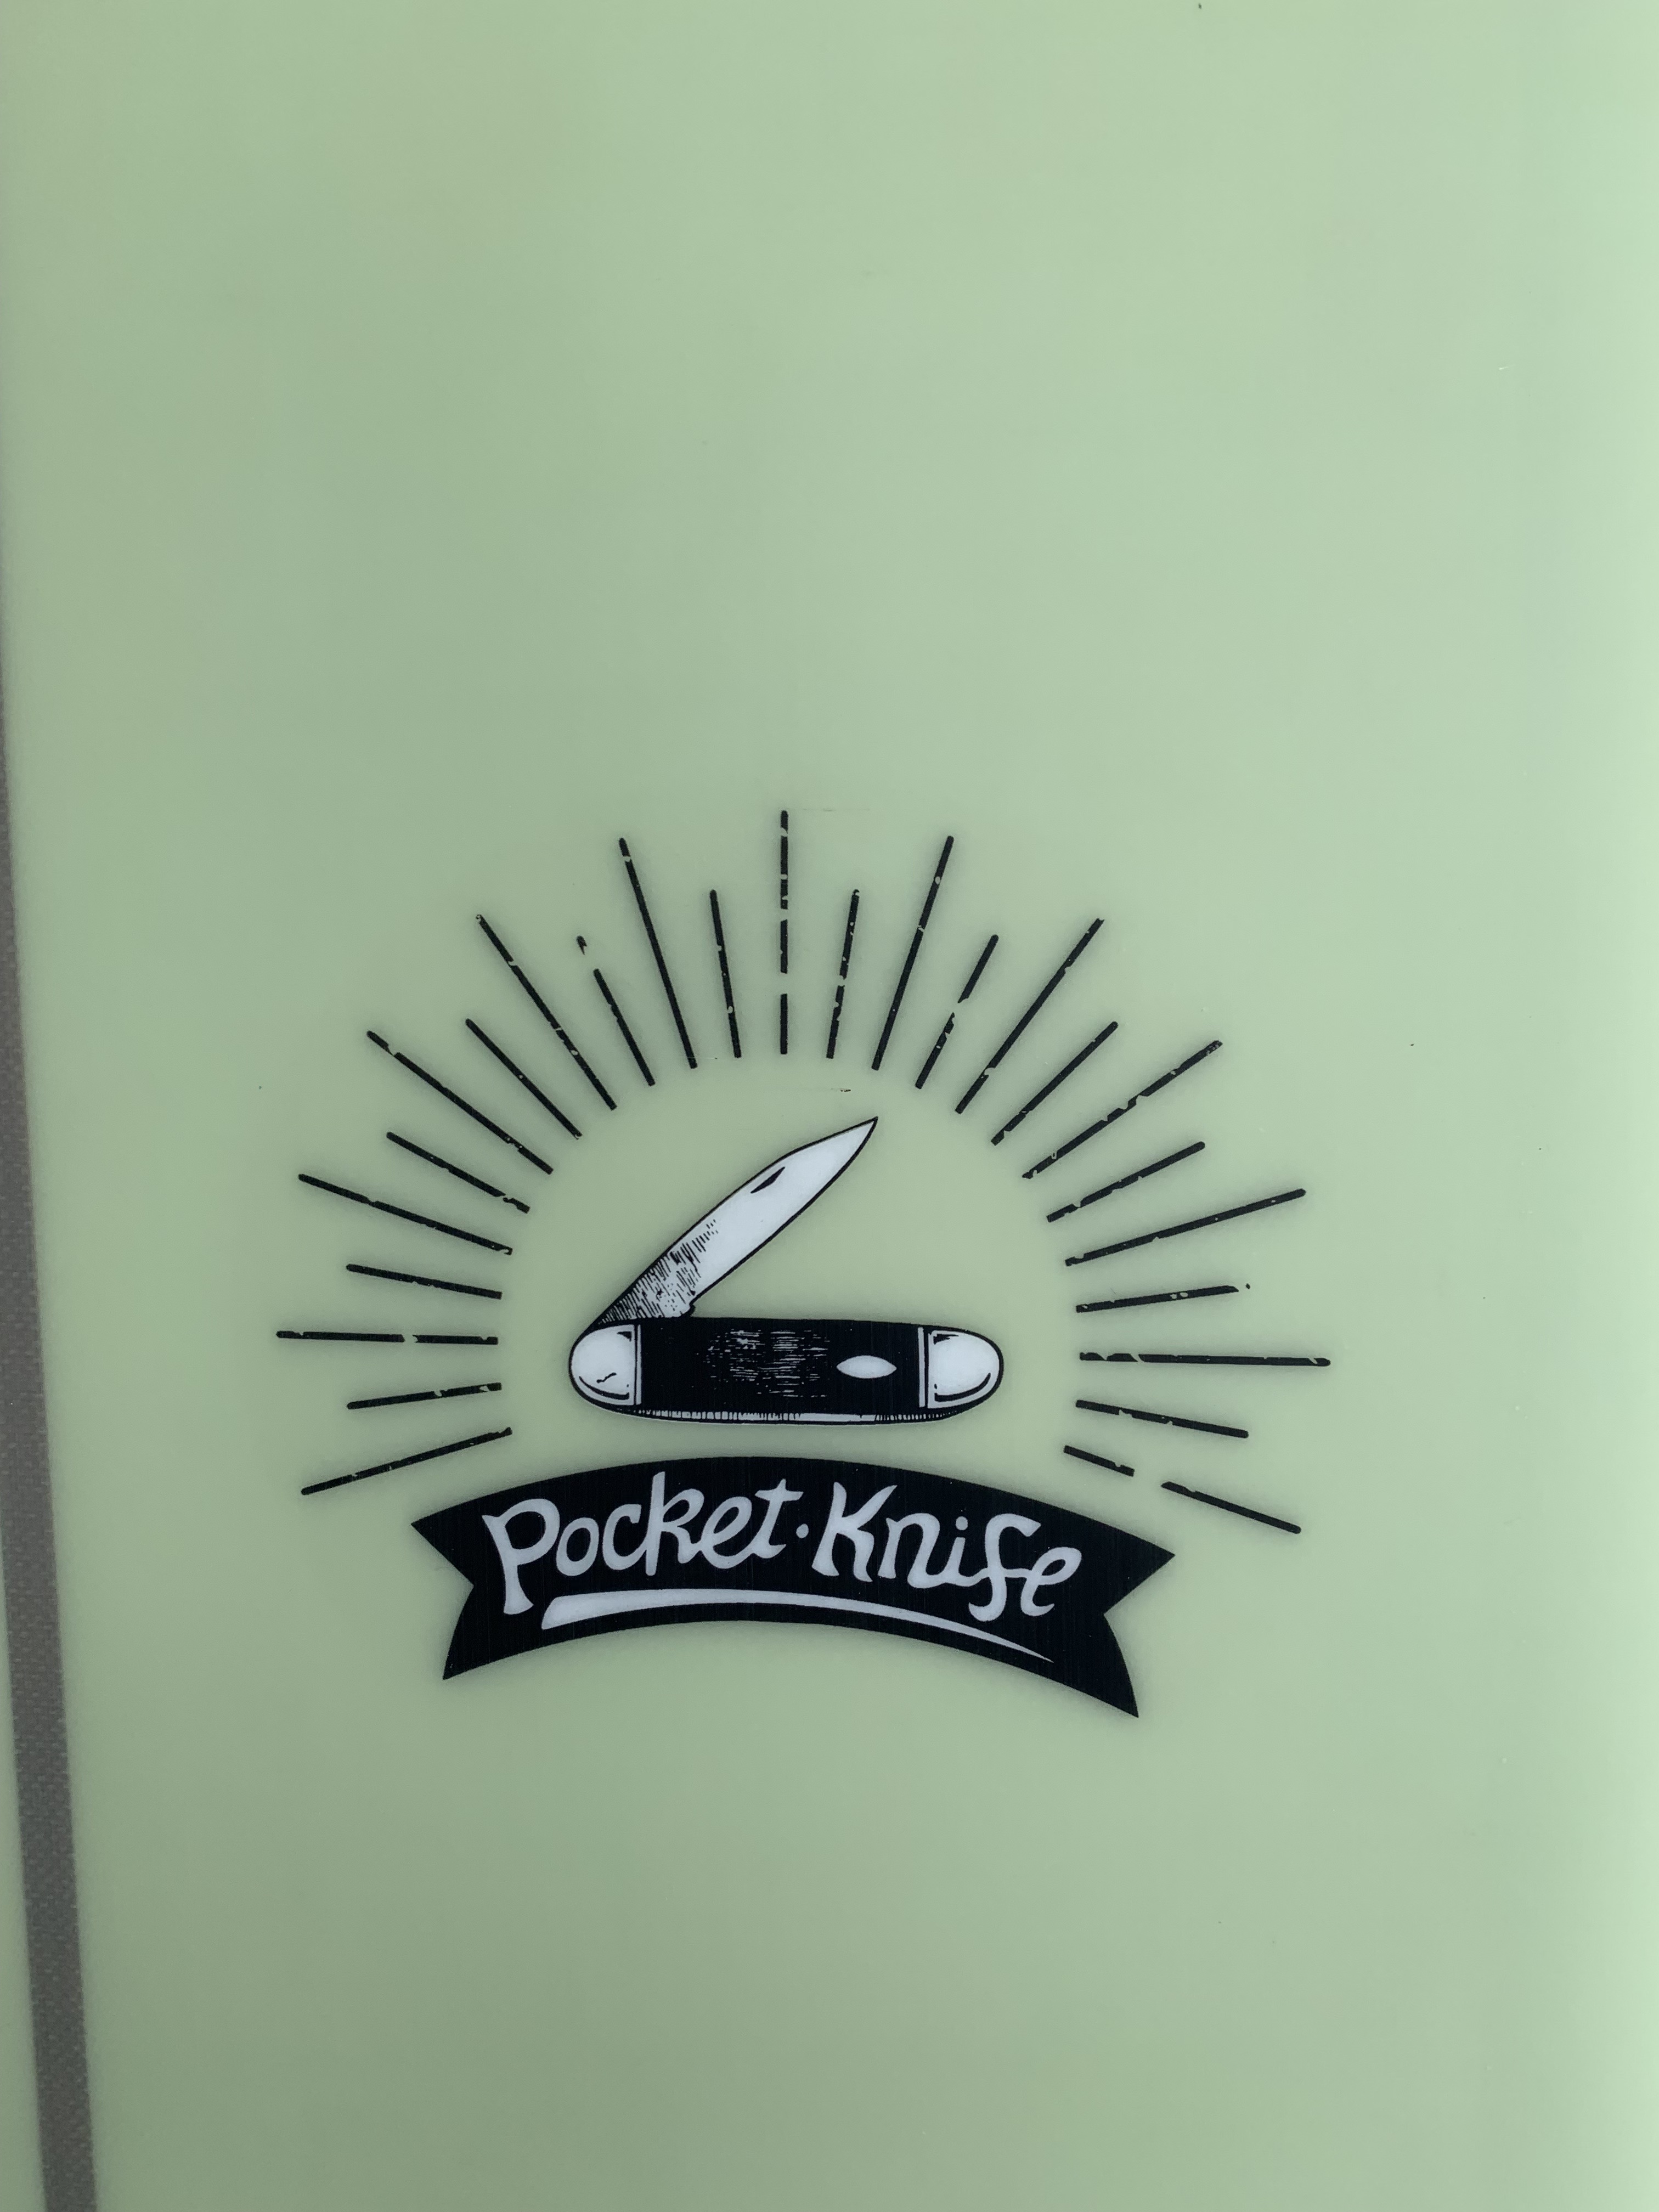 BING Pocket knife 9'2″ | Kiaora SurfAdventure